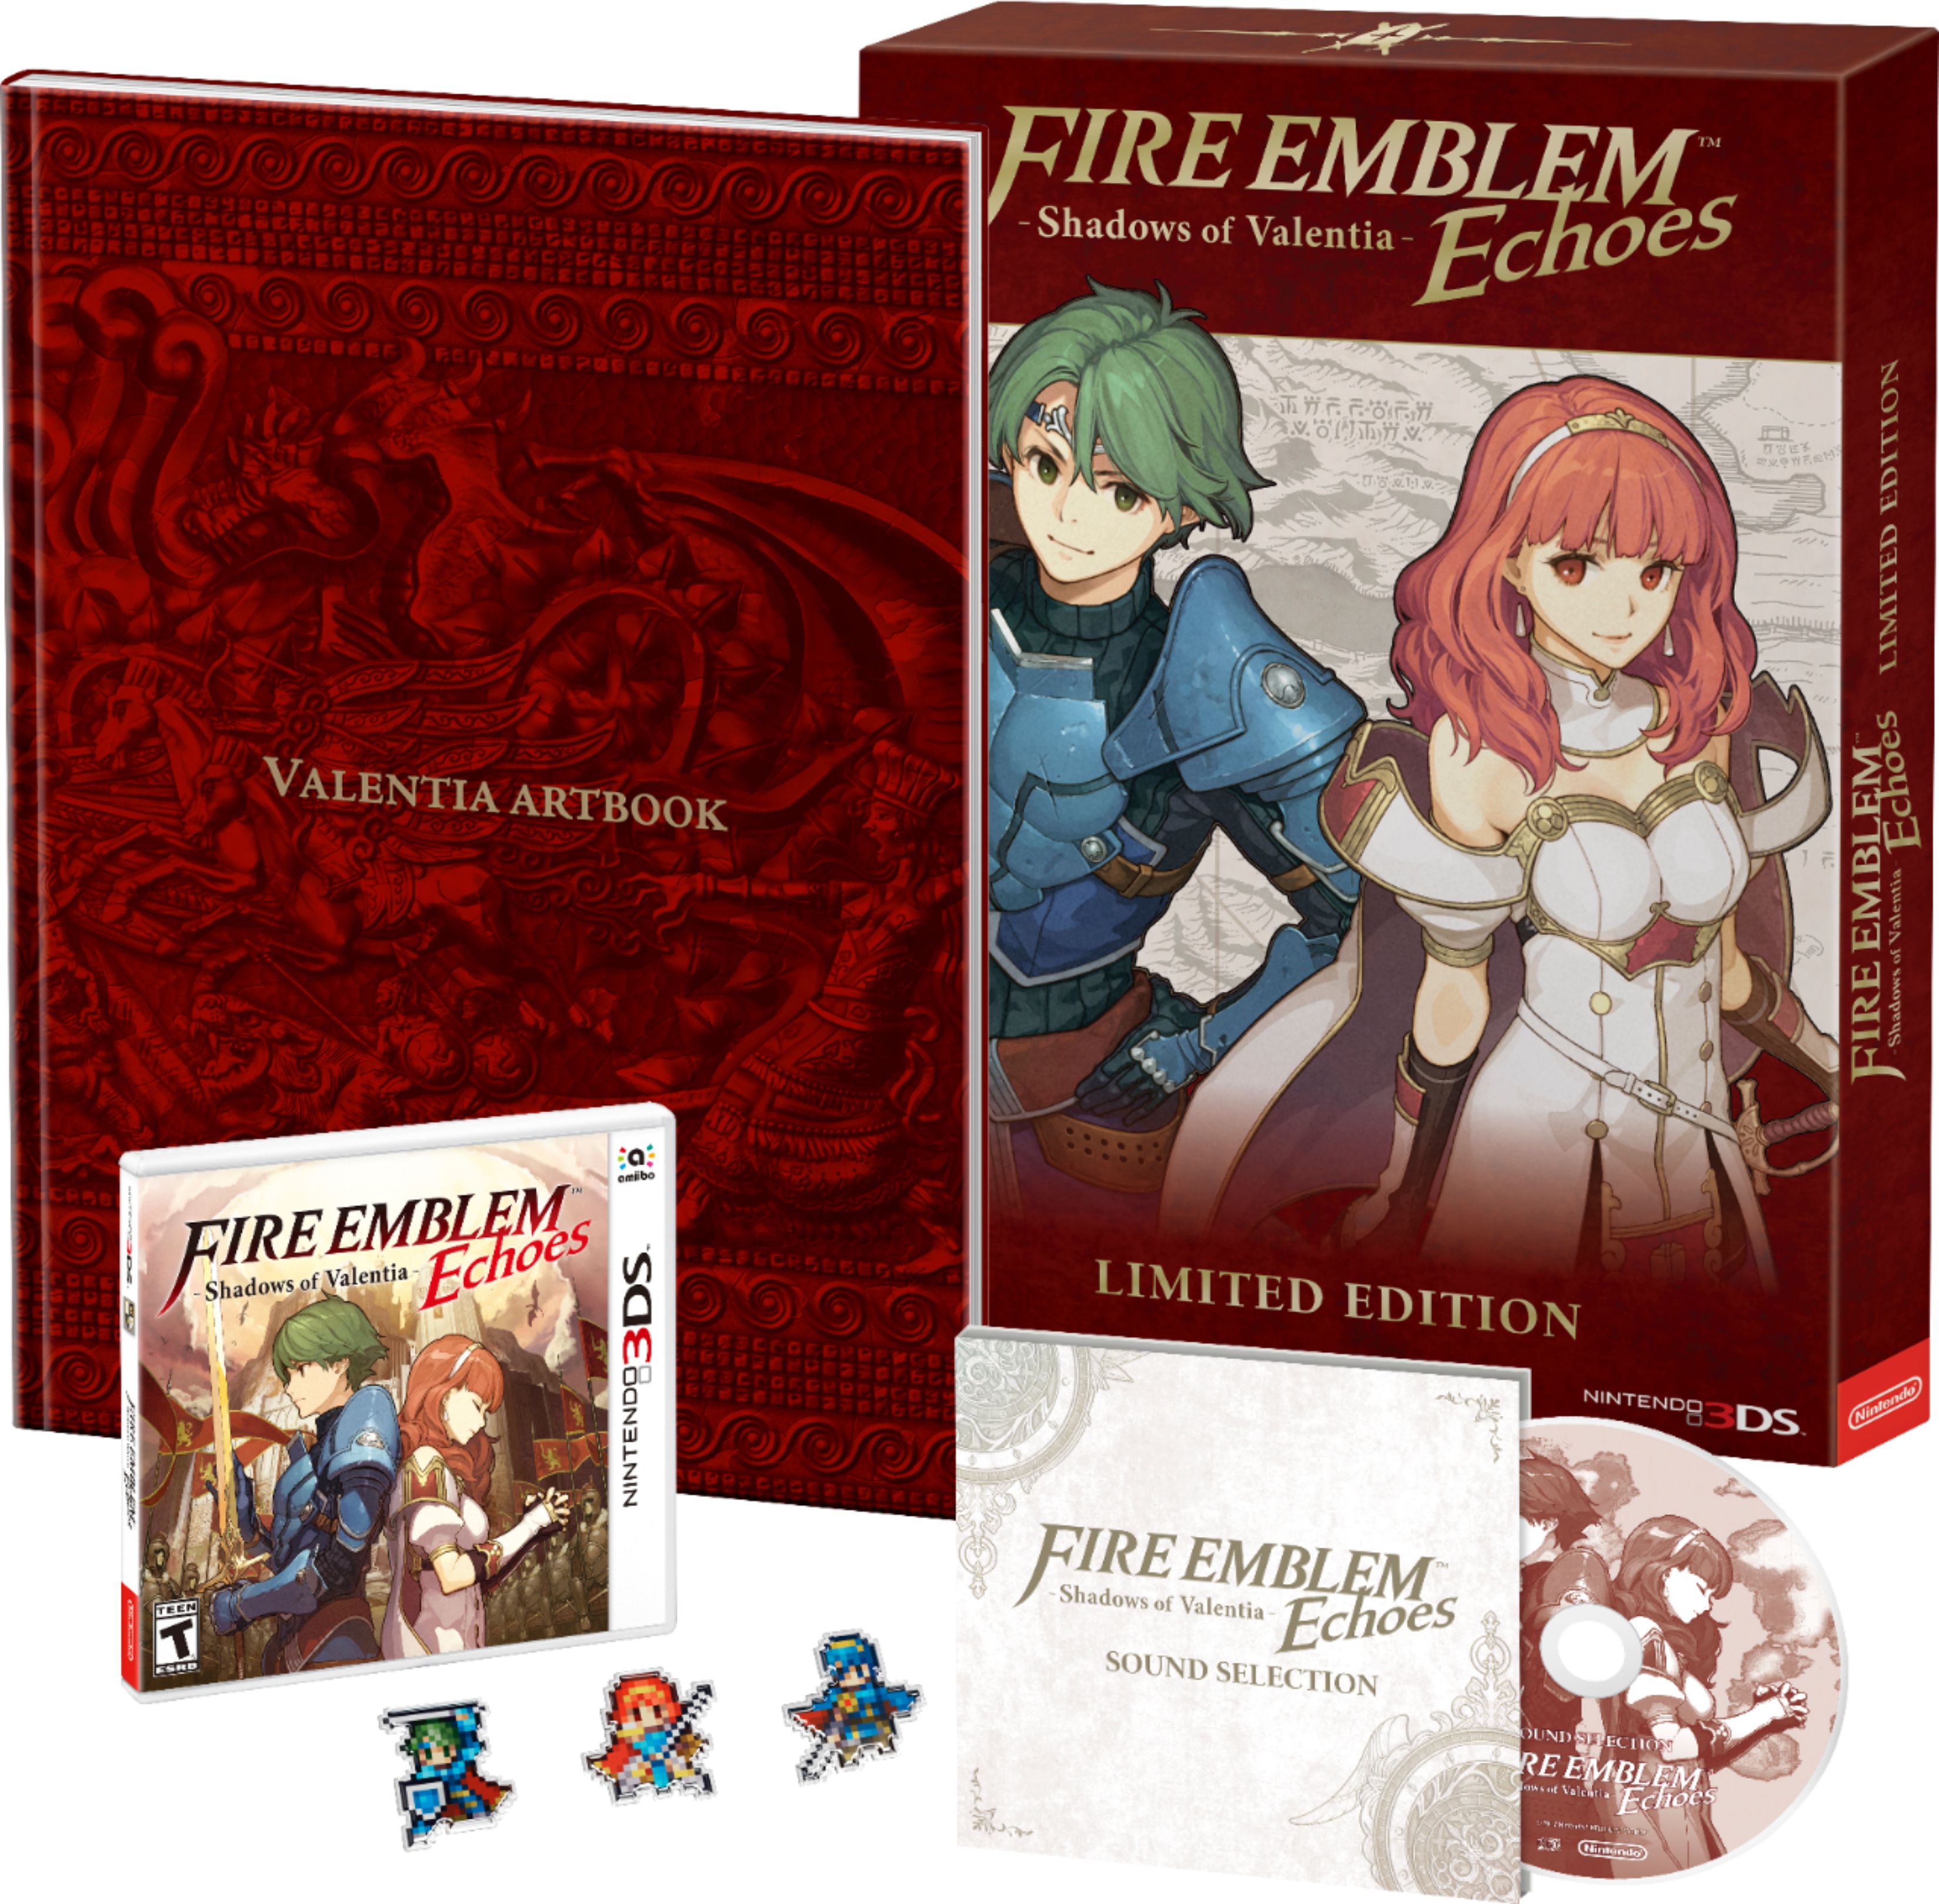 Fire Emblem: Awakening (Nintendo 3DS) BRAND NEW World Version